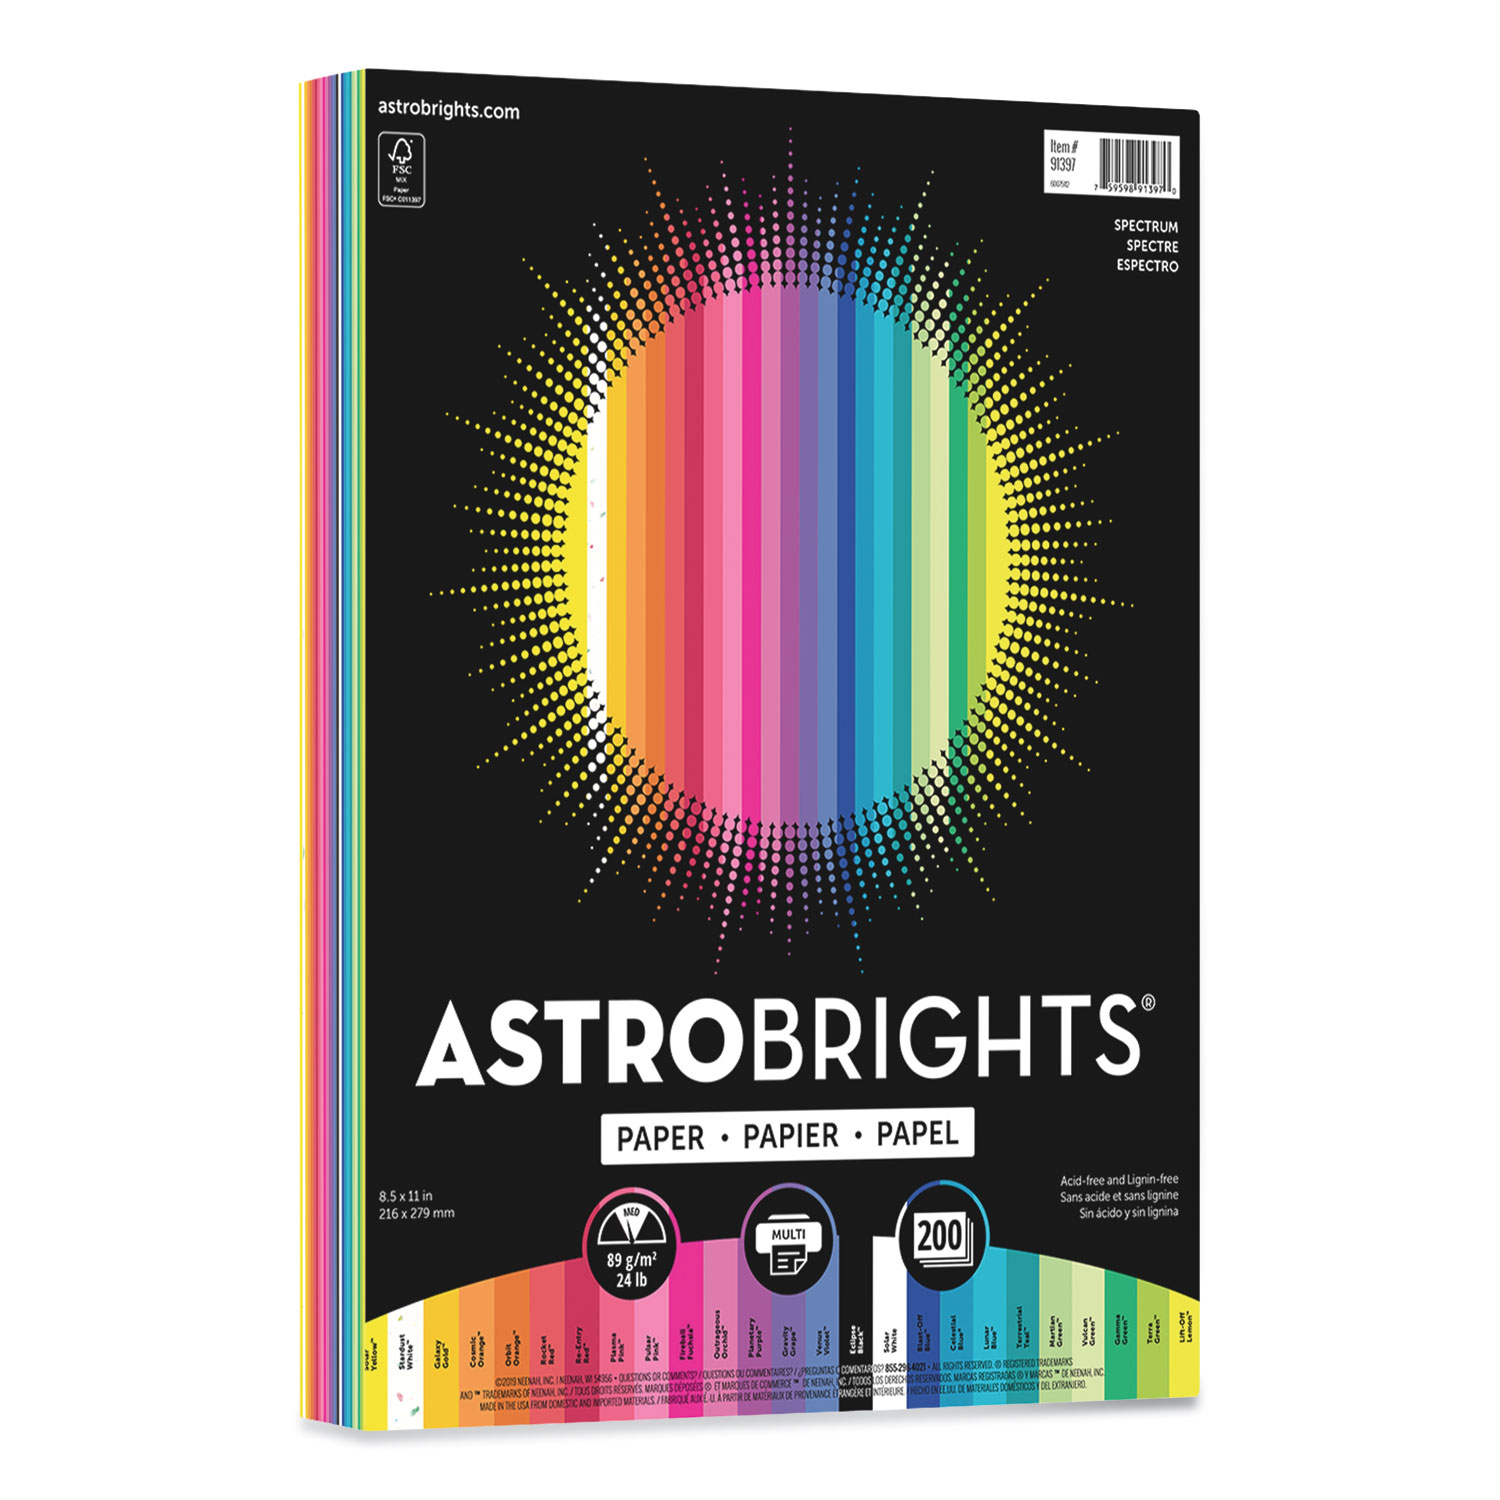  Astrobrights 91397 Color Cardstock - Spectrum Assortment, 24lb, 8.5 x 11, Assorted Spectrum Colors, 200/Pack (WAU91397) 